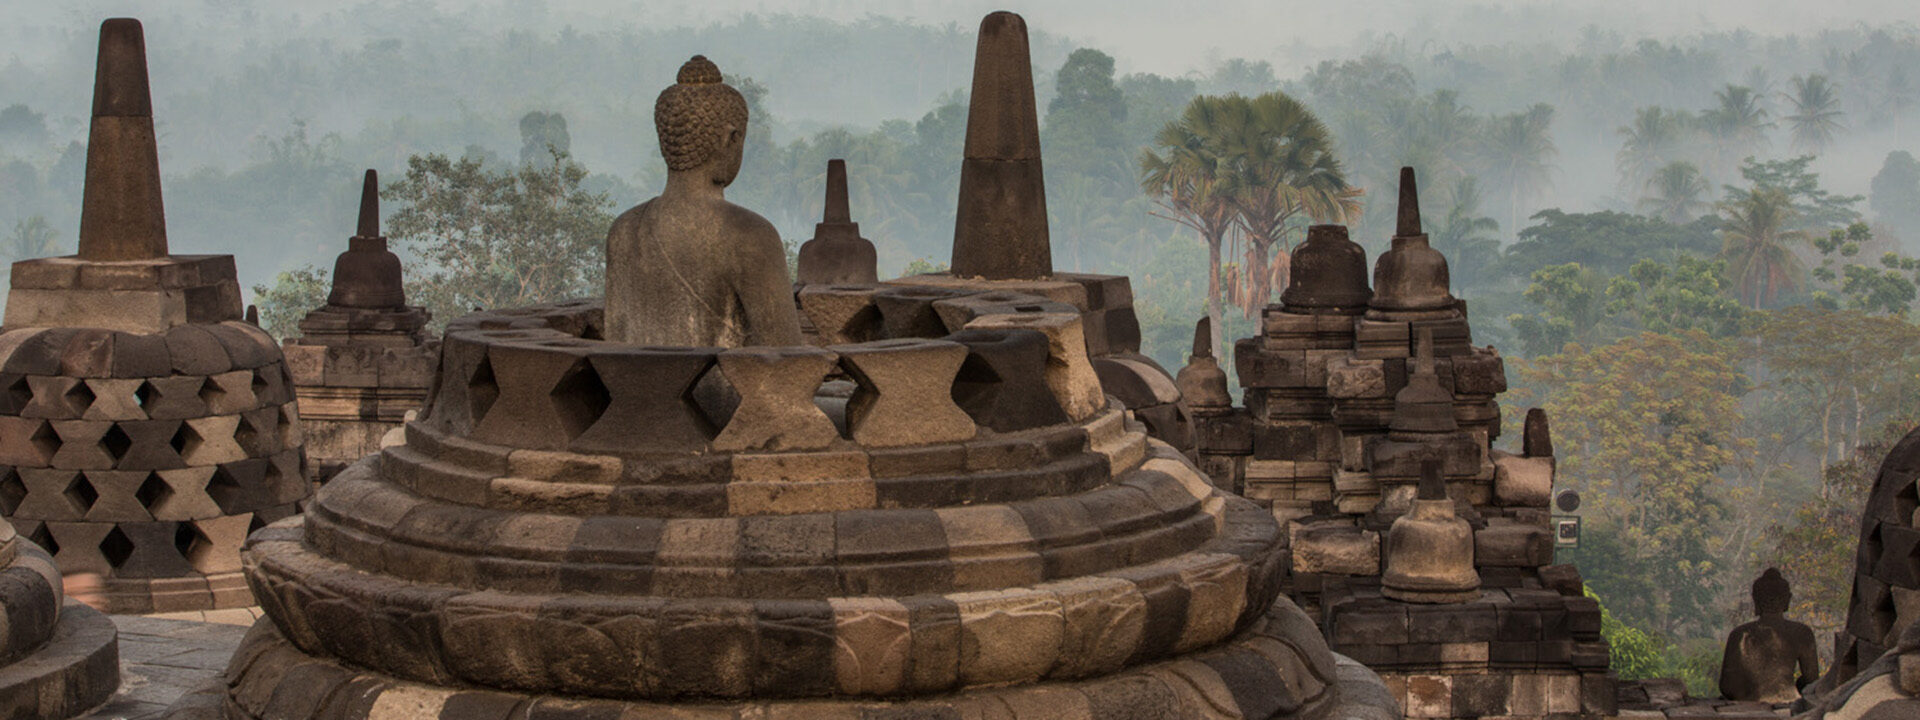 Sliderbild: Buddhas vom Borobudur